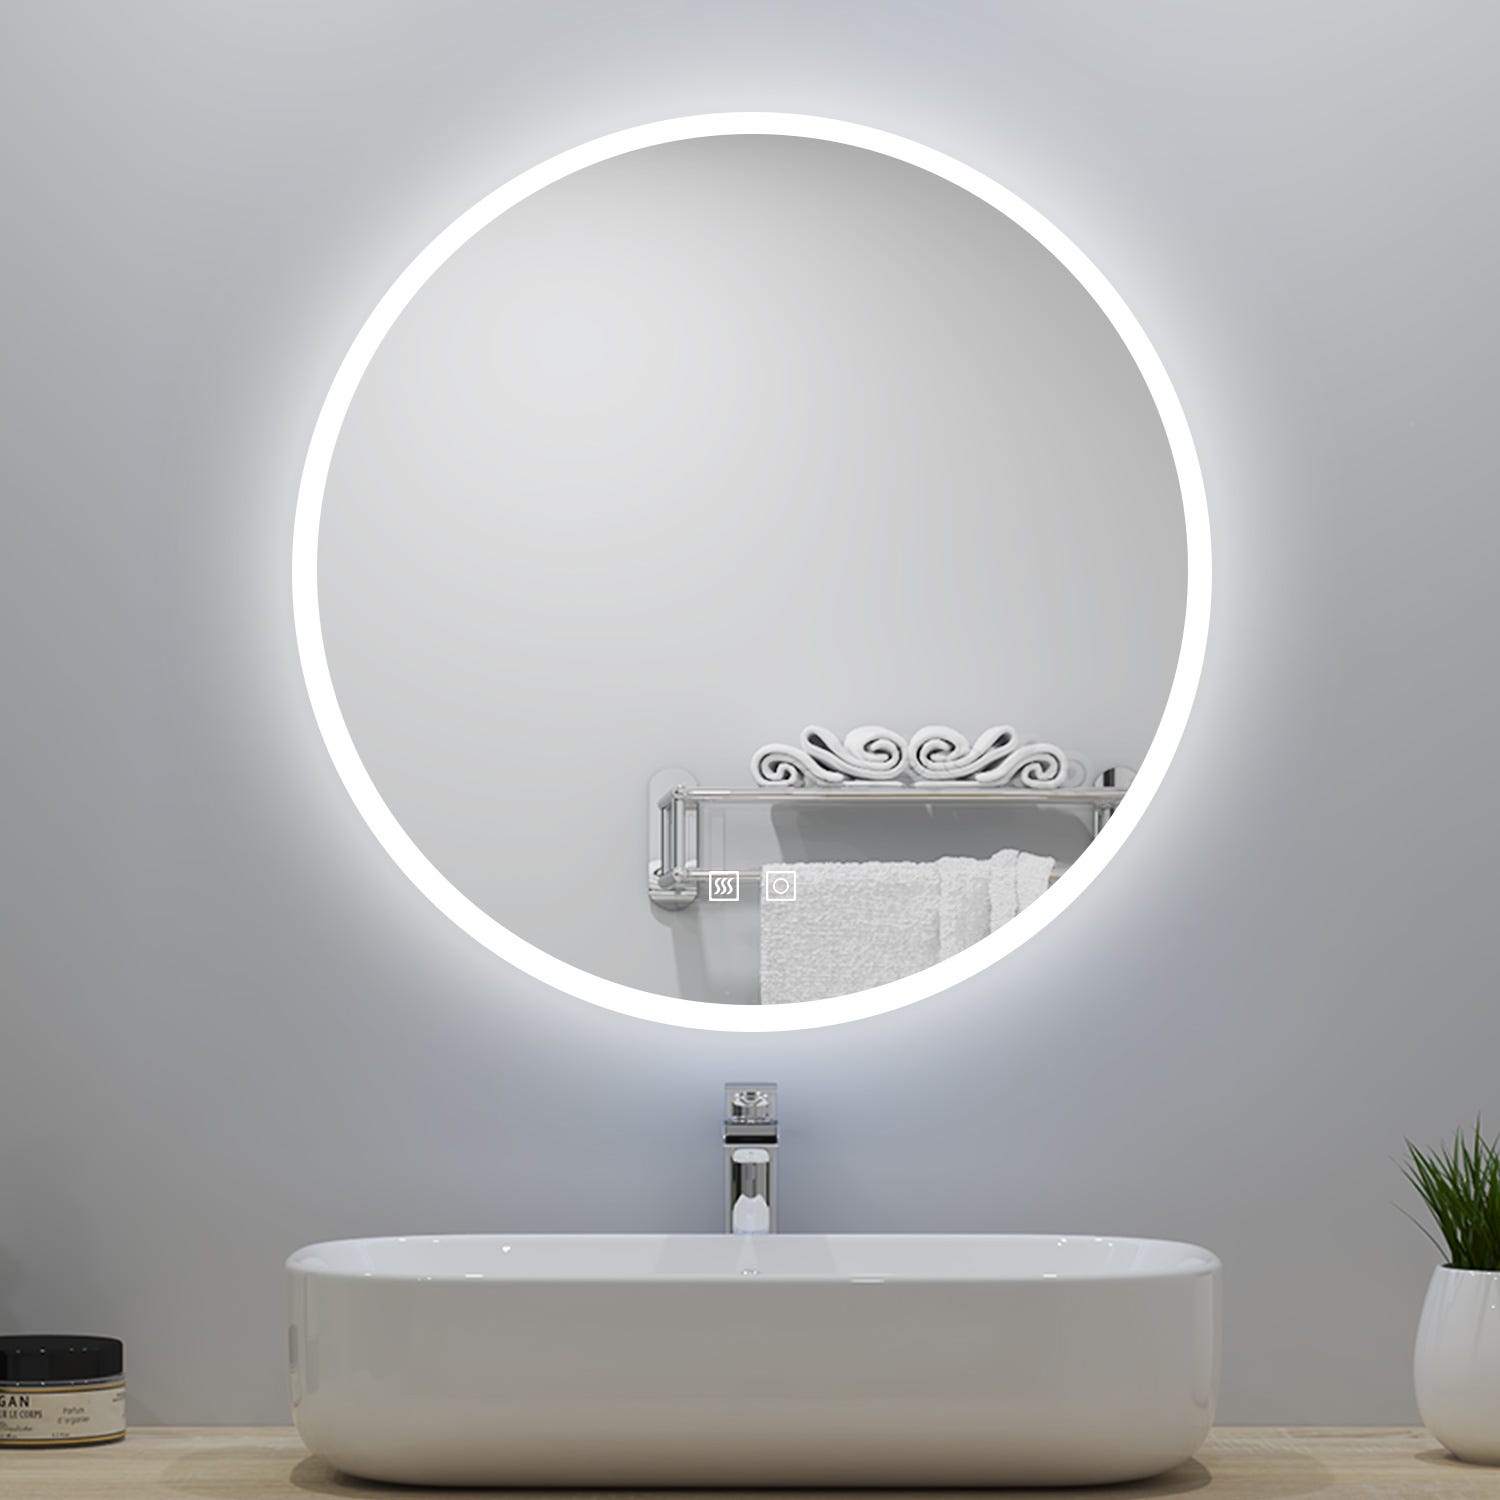 Comprar aplique LED para baños, montaje sobre espejo, mueble o pared